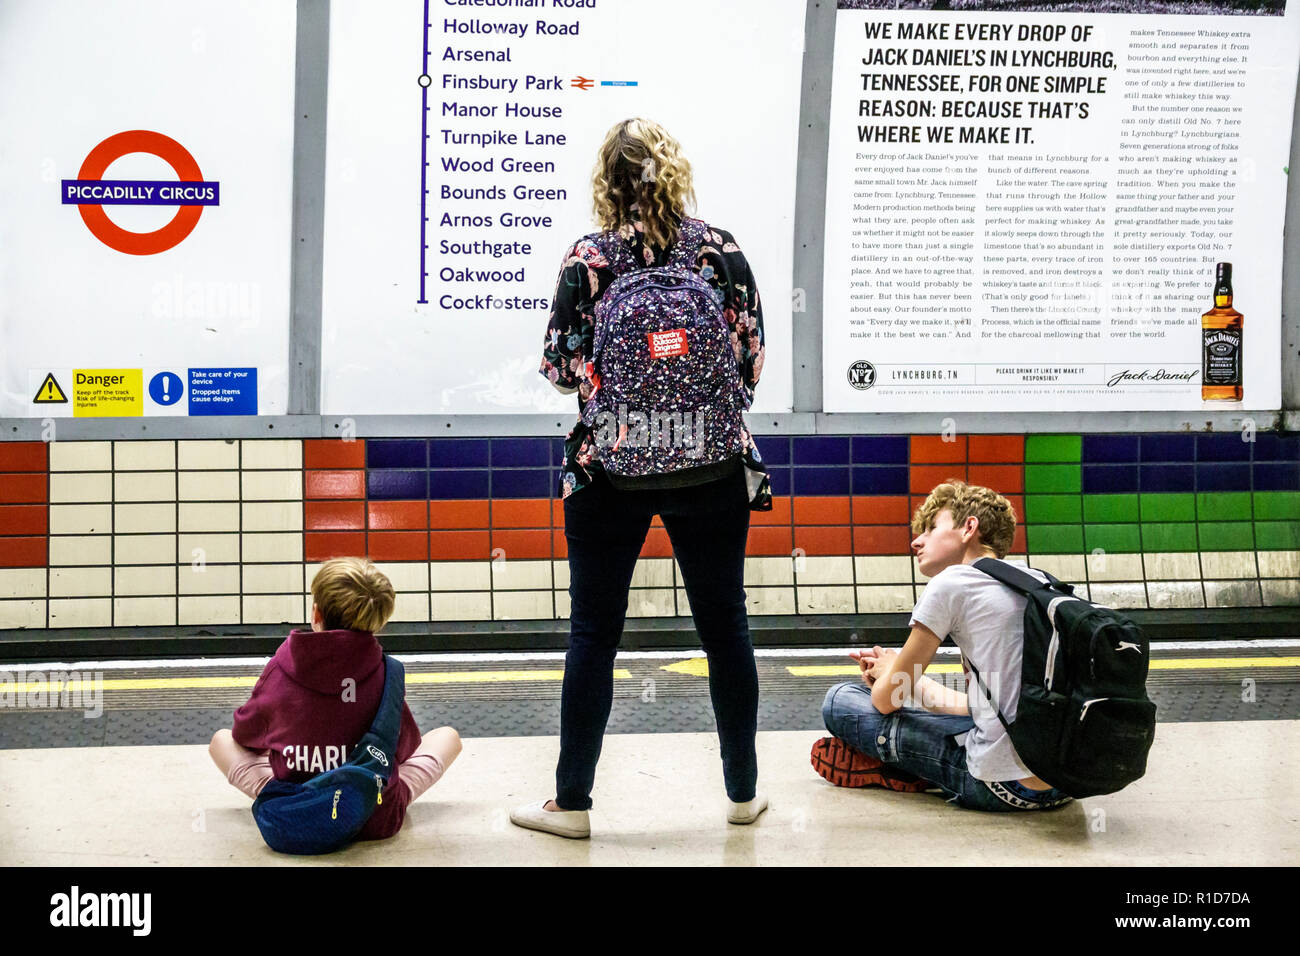 Londra Inghilterra,Regno Unito,Soho,Piccadilly Circus stazione metropolitana treno metropolitana, metropolitana, piattaforma, donna donne, ragazzi, maschio bambini bambini bambini bambini Foto Stock